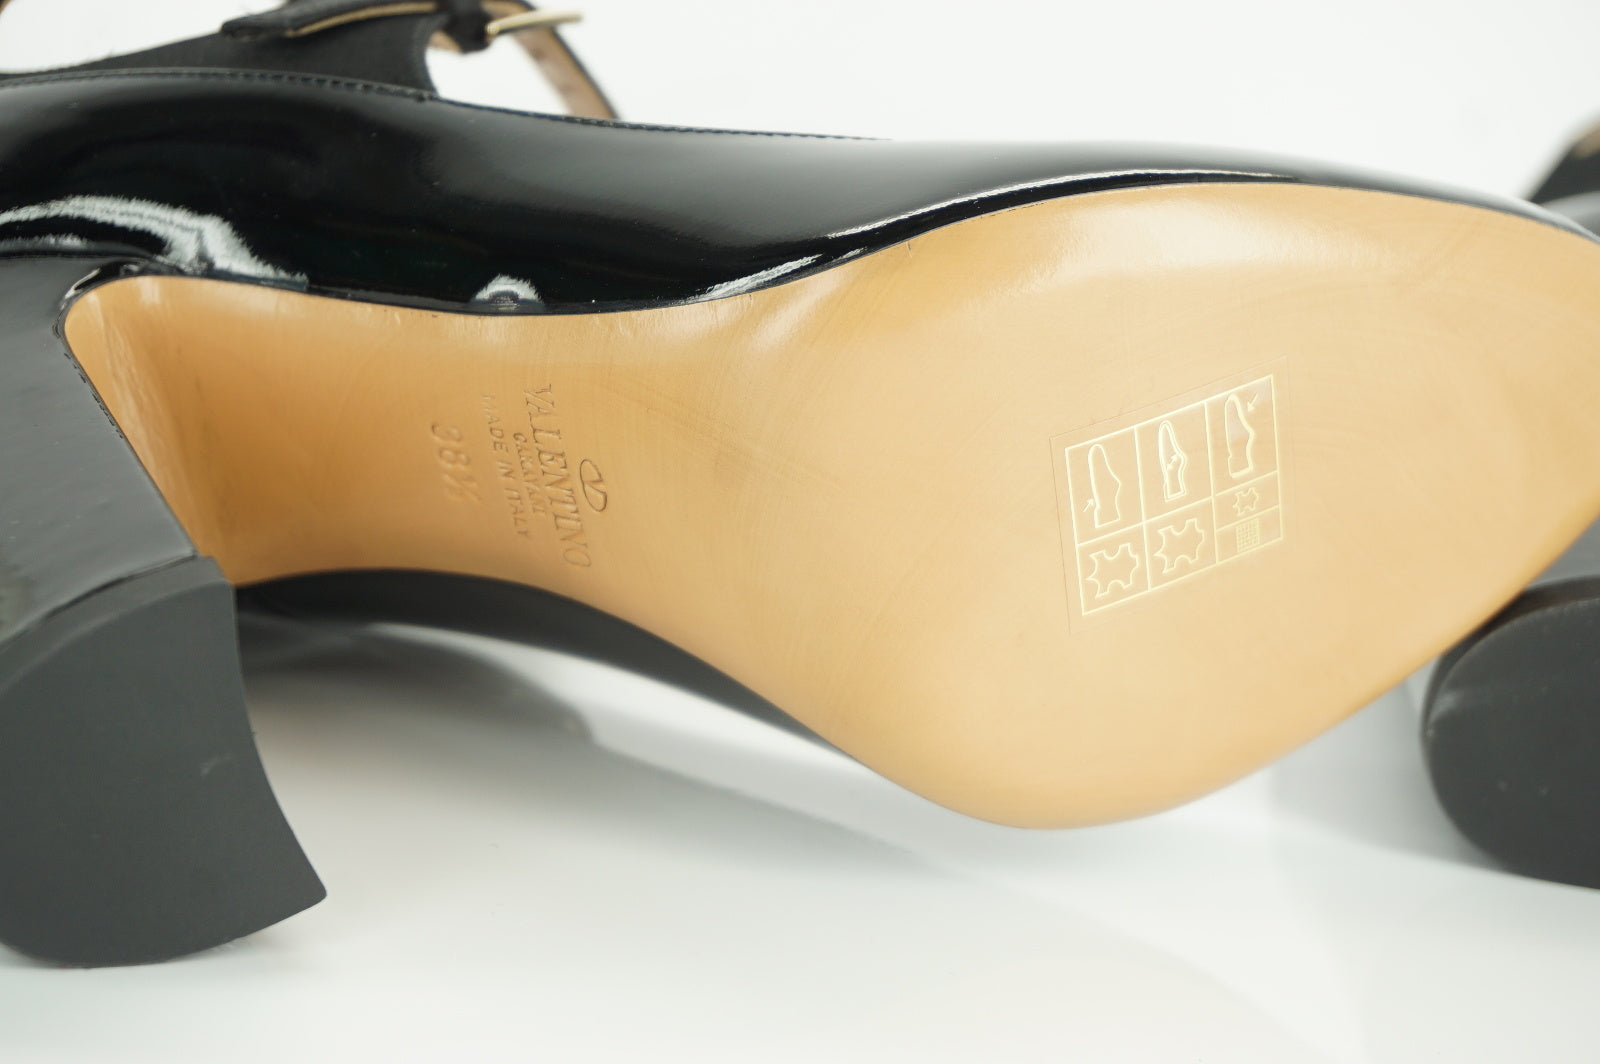 Valentino Garavani Ankle Strap Black Patent Satin Pumps Size 38.5 Heels $945